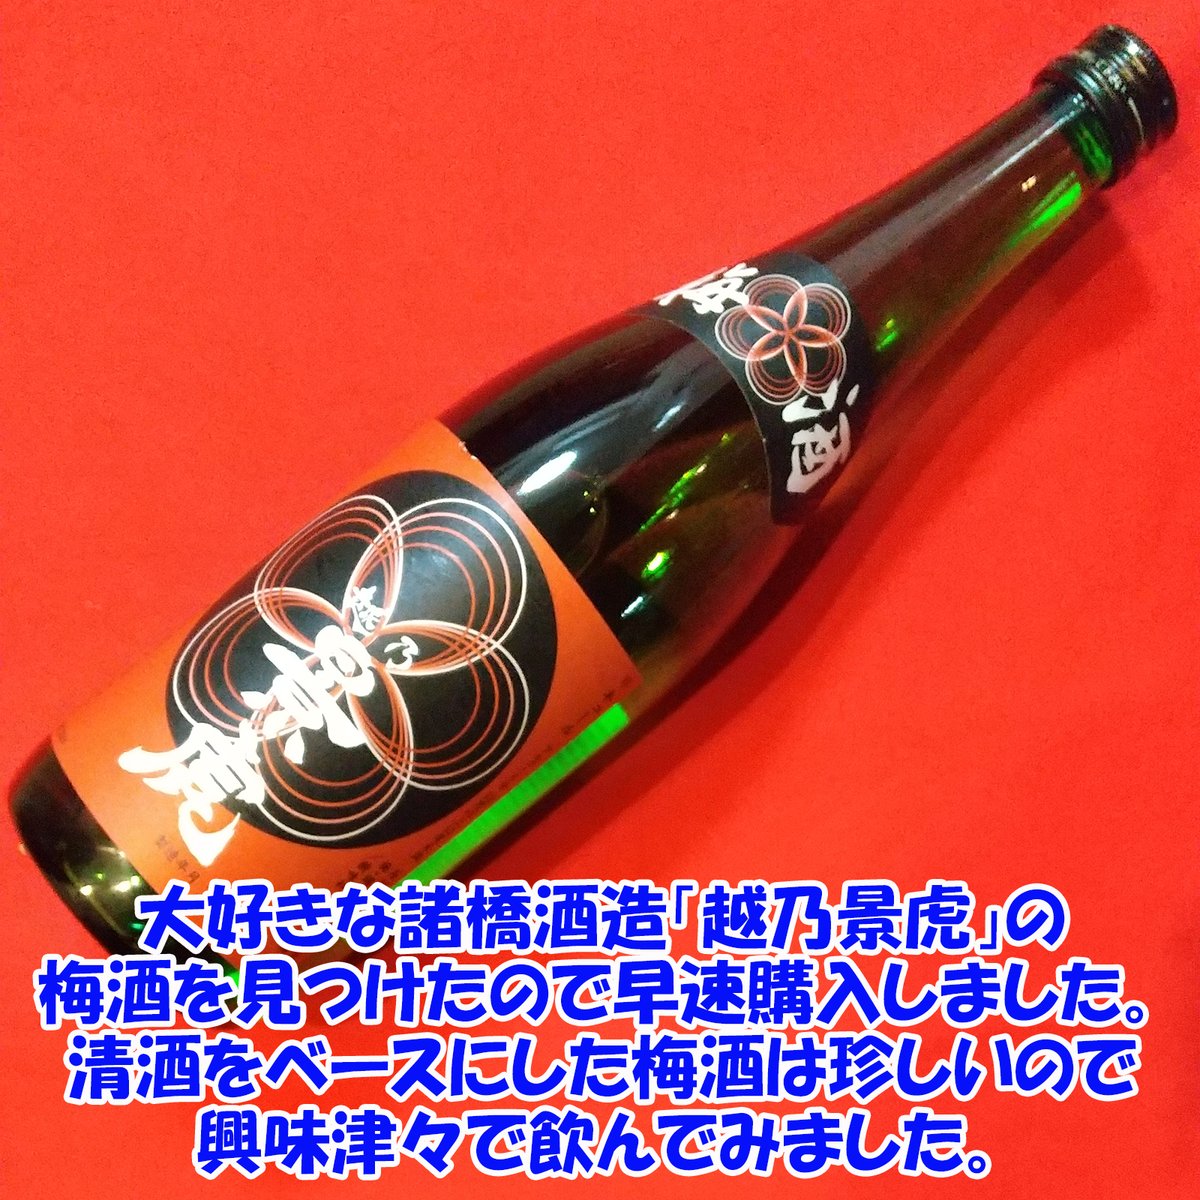 test ツイッターメディア - #諸橋酒造 の #越乃景虎梅酒 を見つけたので飲んでみました。
梅酒特有の甘い口当たりと爽やかな梅の香りがあり、日本酒らしい吟醸の香りも感じられてました。
製造が2月と11月なので希少な梅酒です。

【越乃景虎梅酒】
https://t.co/AYJQY0qNyu

#拡散希望
#美味しいを伝える
#諸橋酒造 
#越乃景虎 https://t.co/iQeuaMvsXl